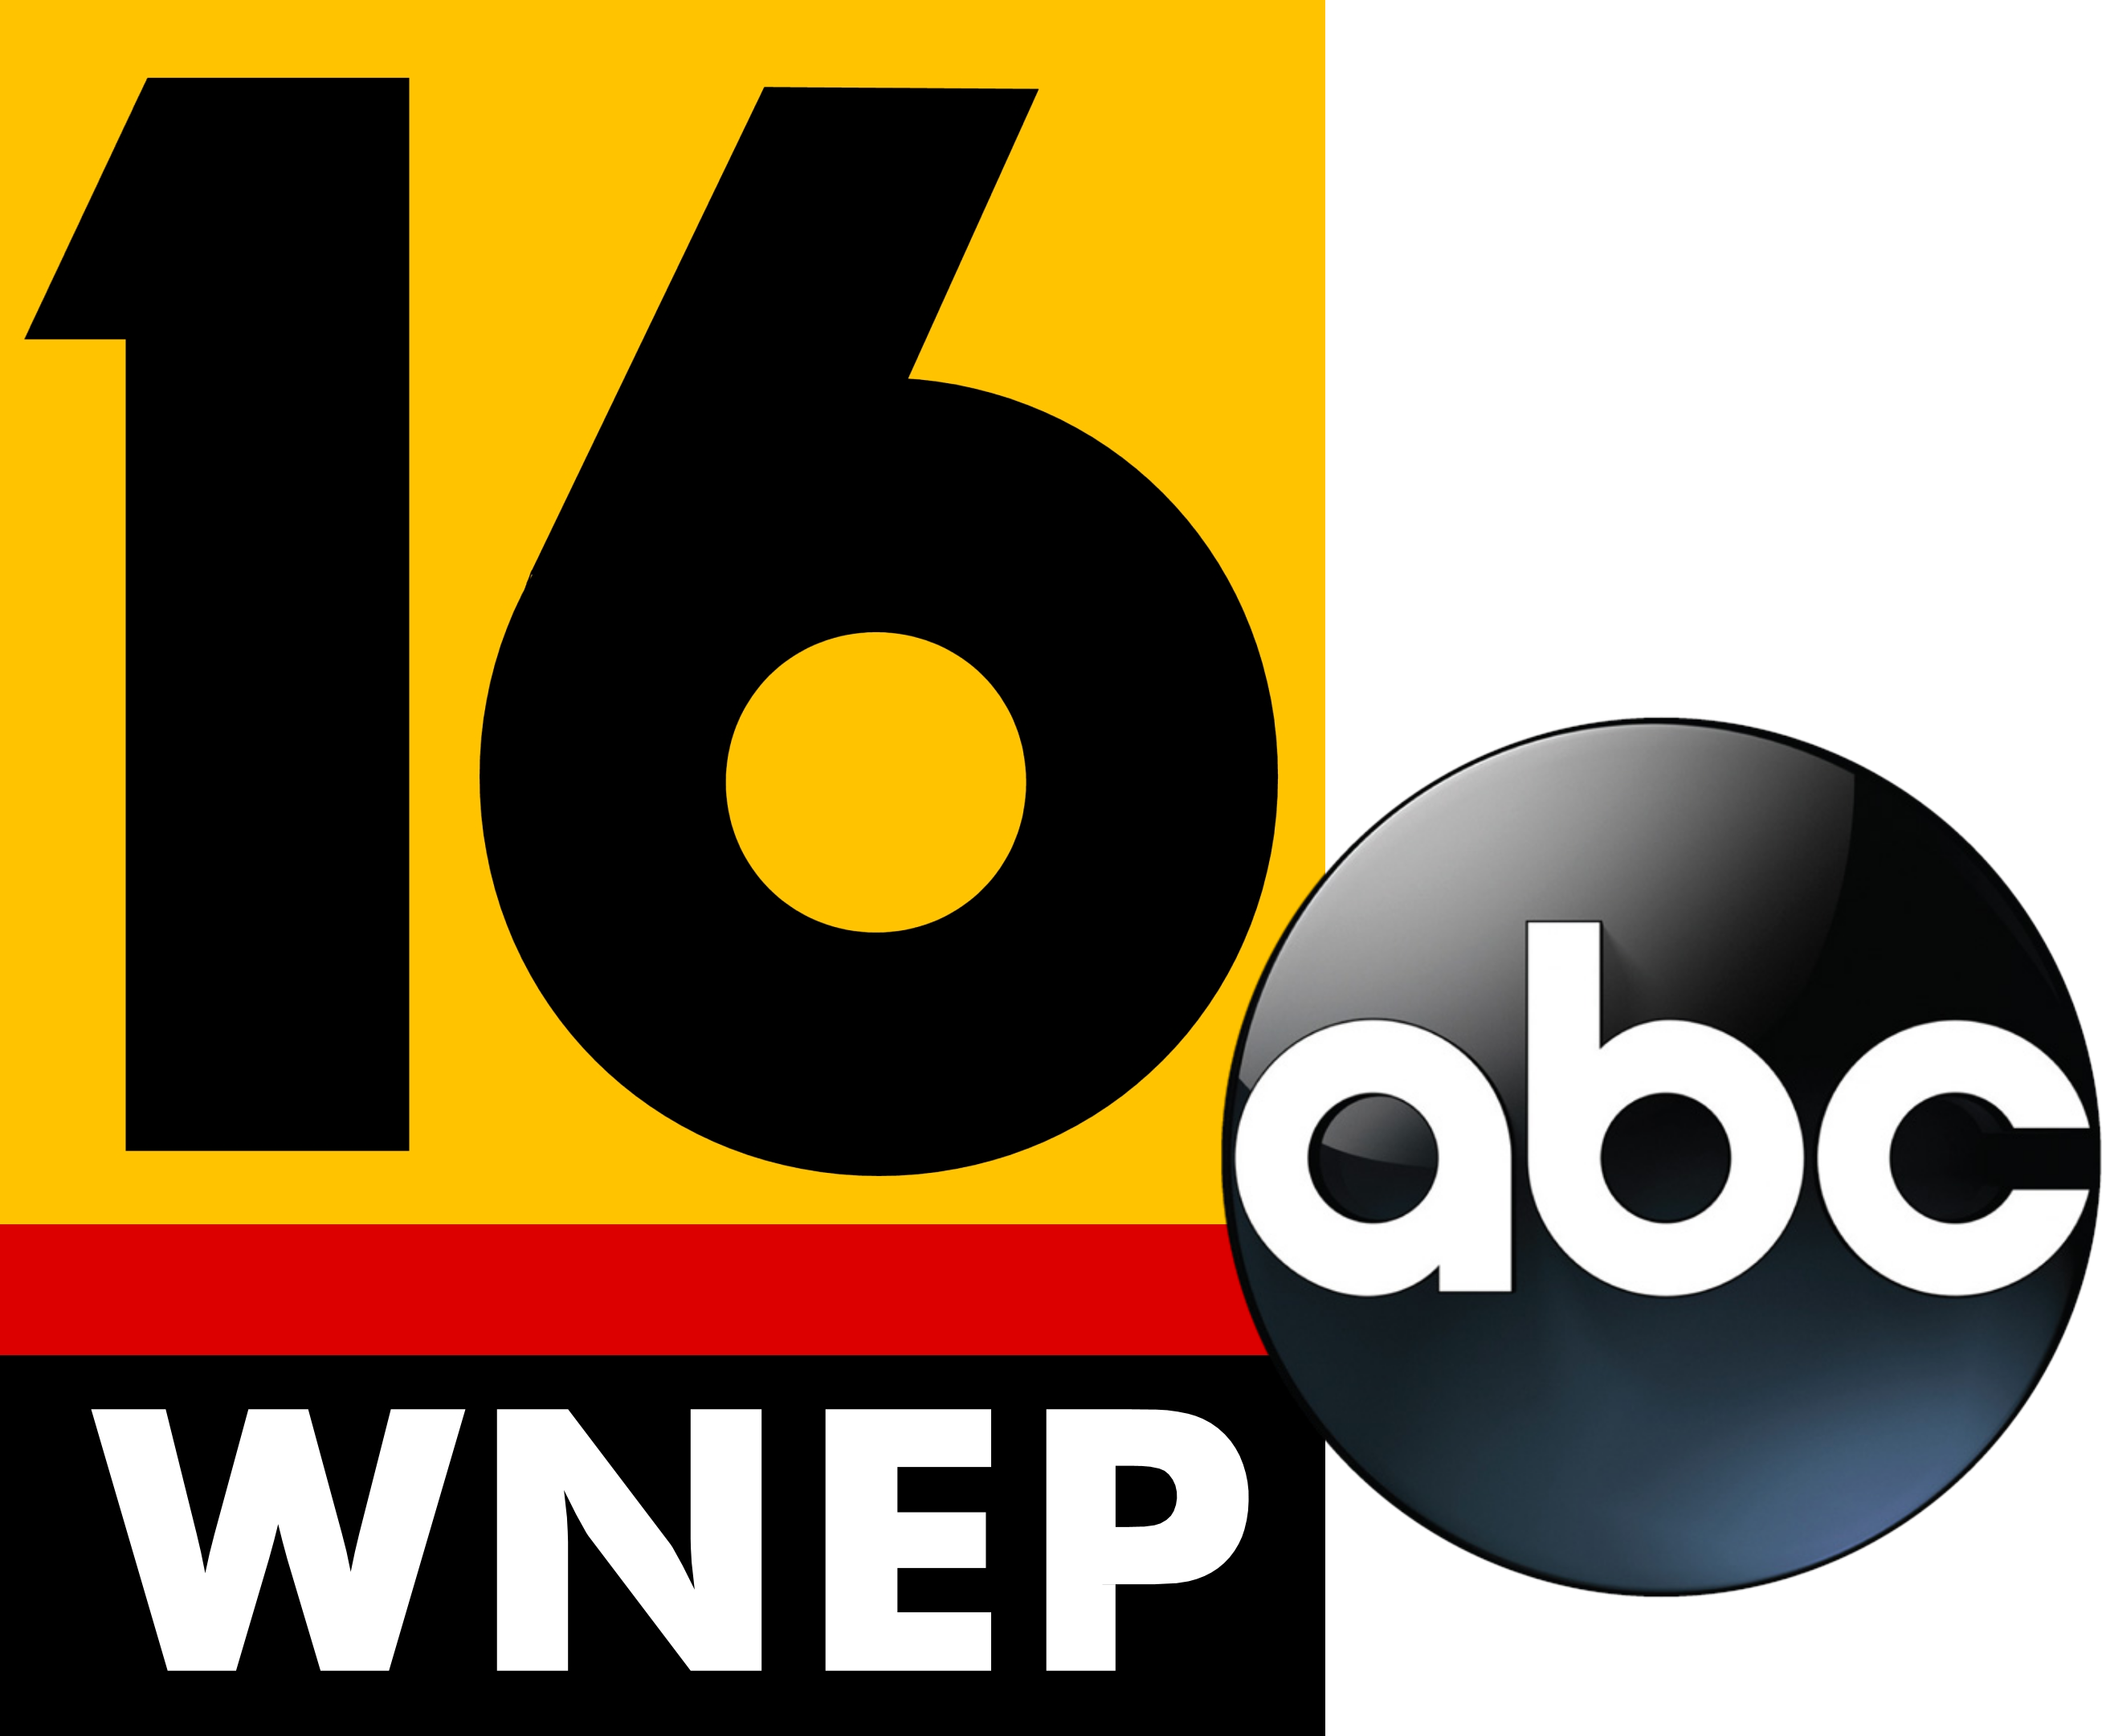 16 WNEP The News Station logo